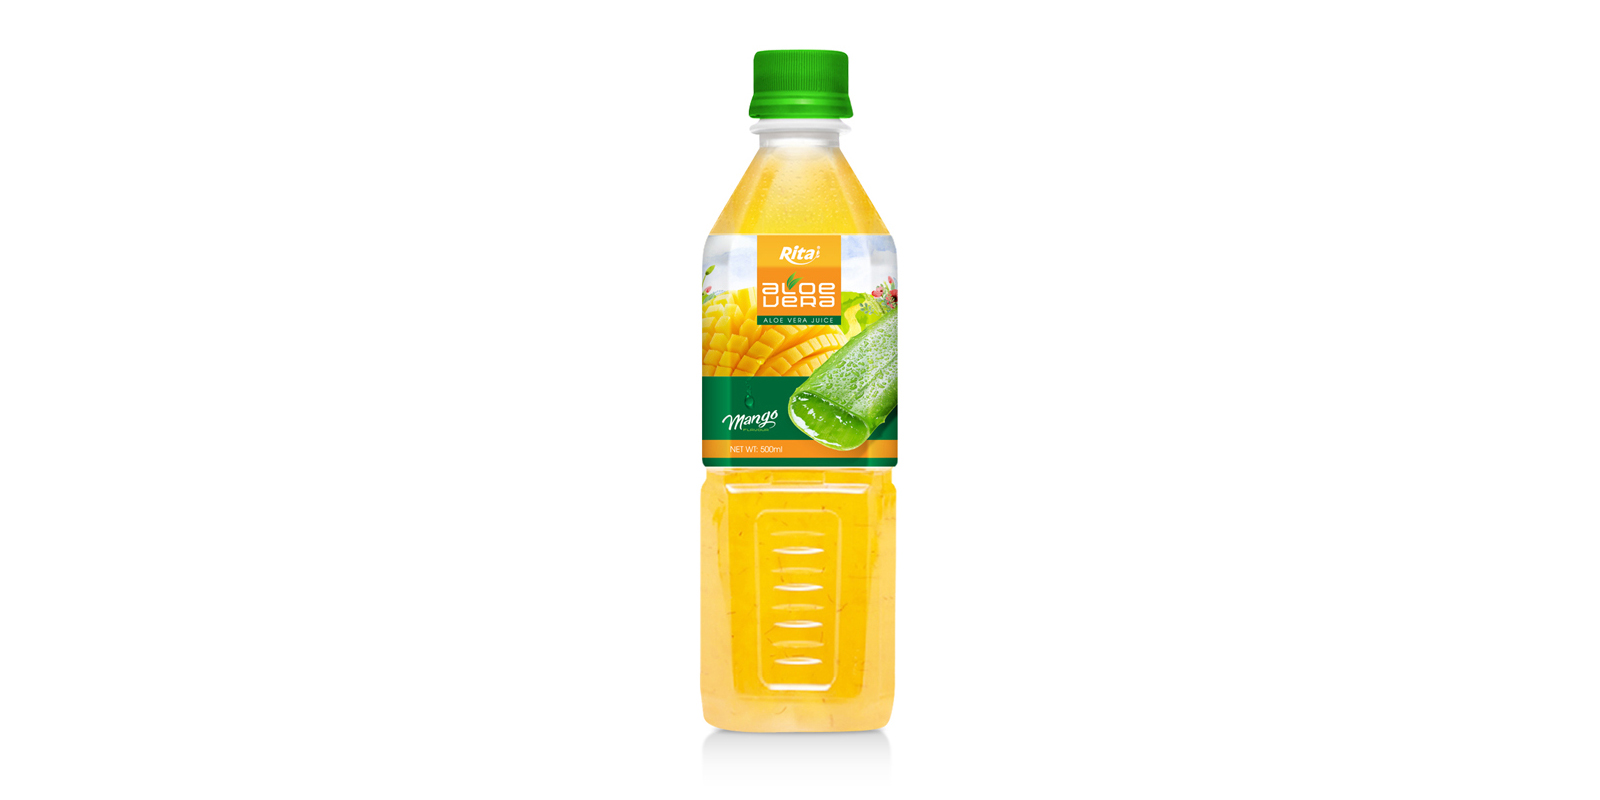 Aloe vera mango juice 500ml Pet bottle